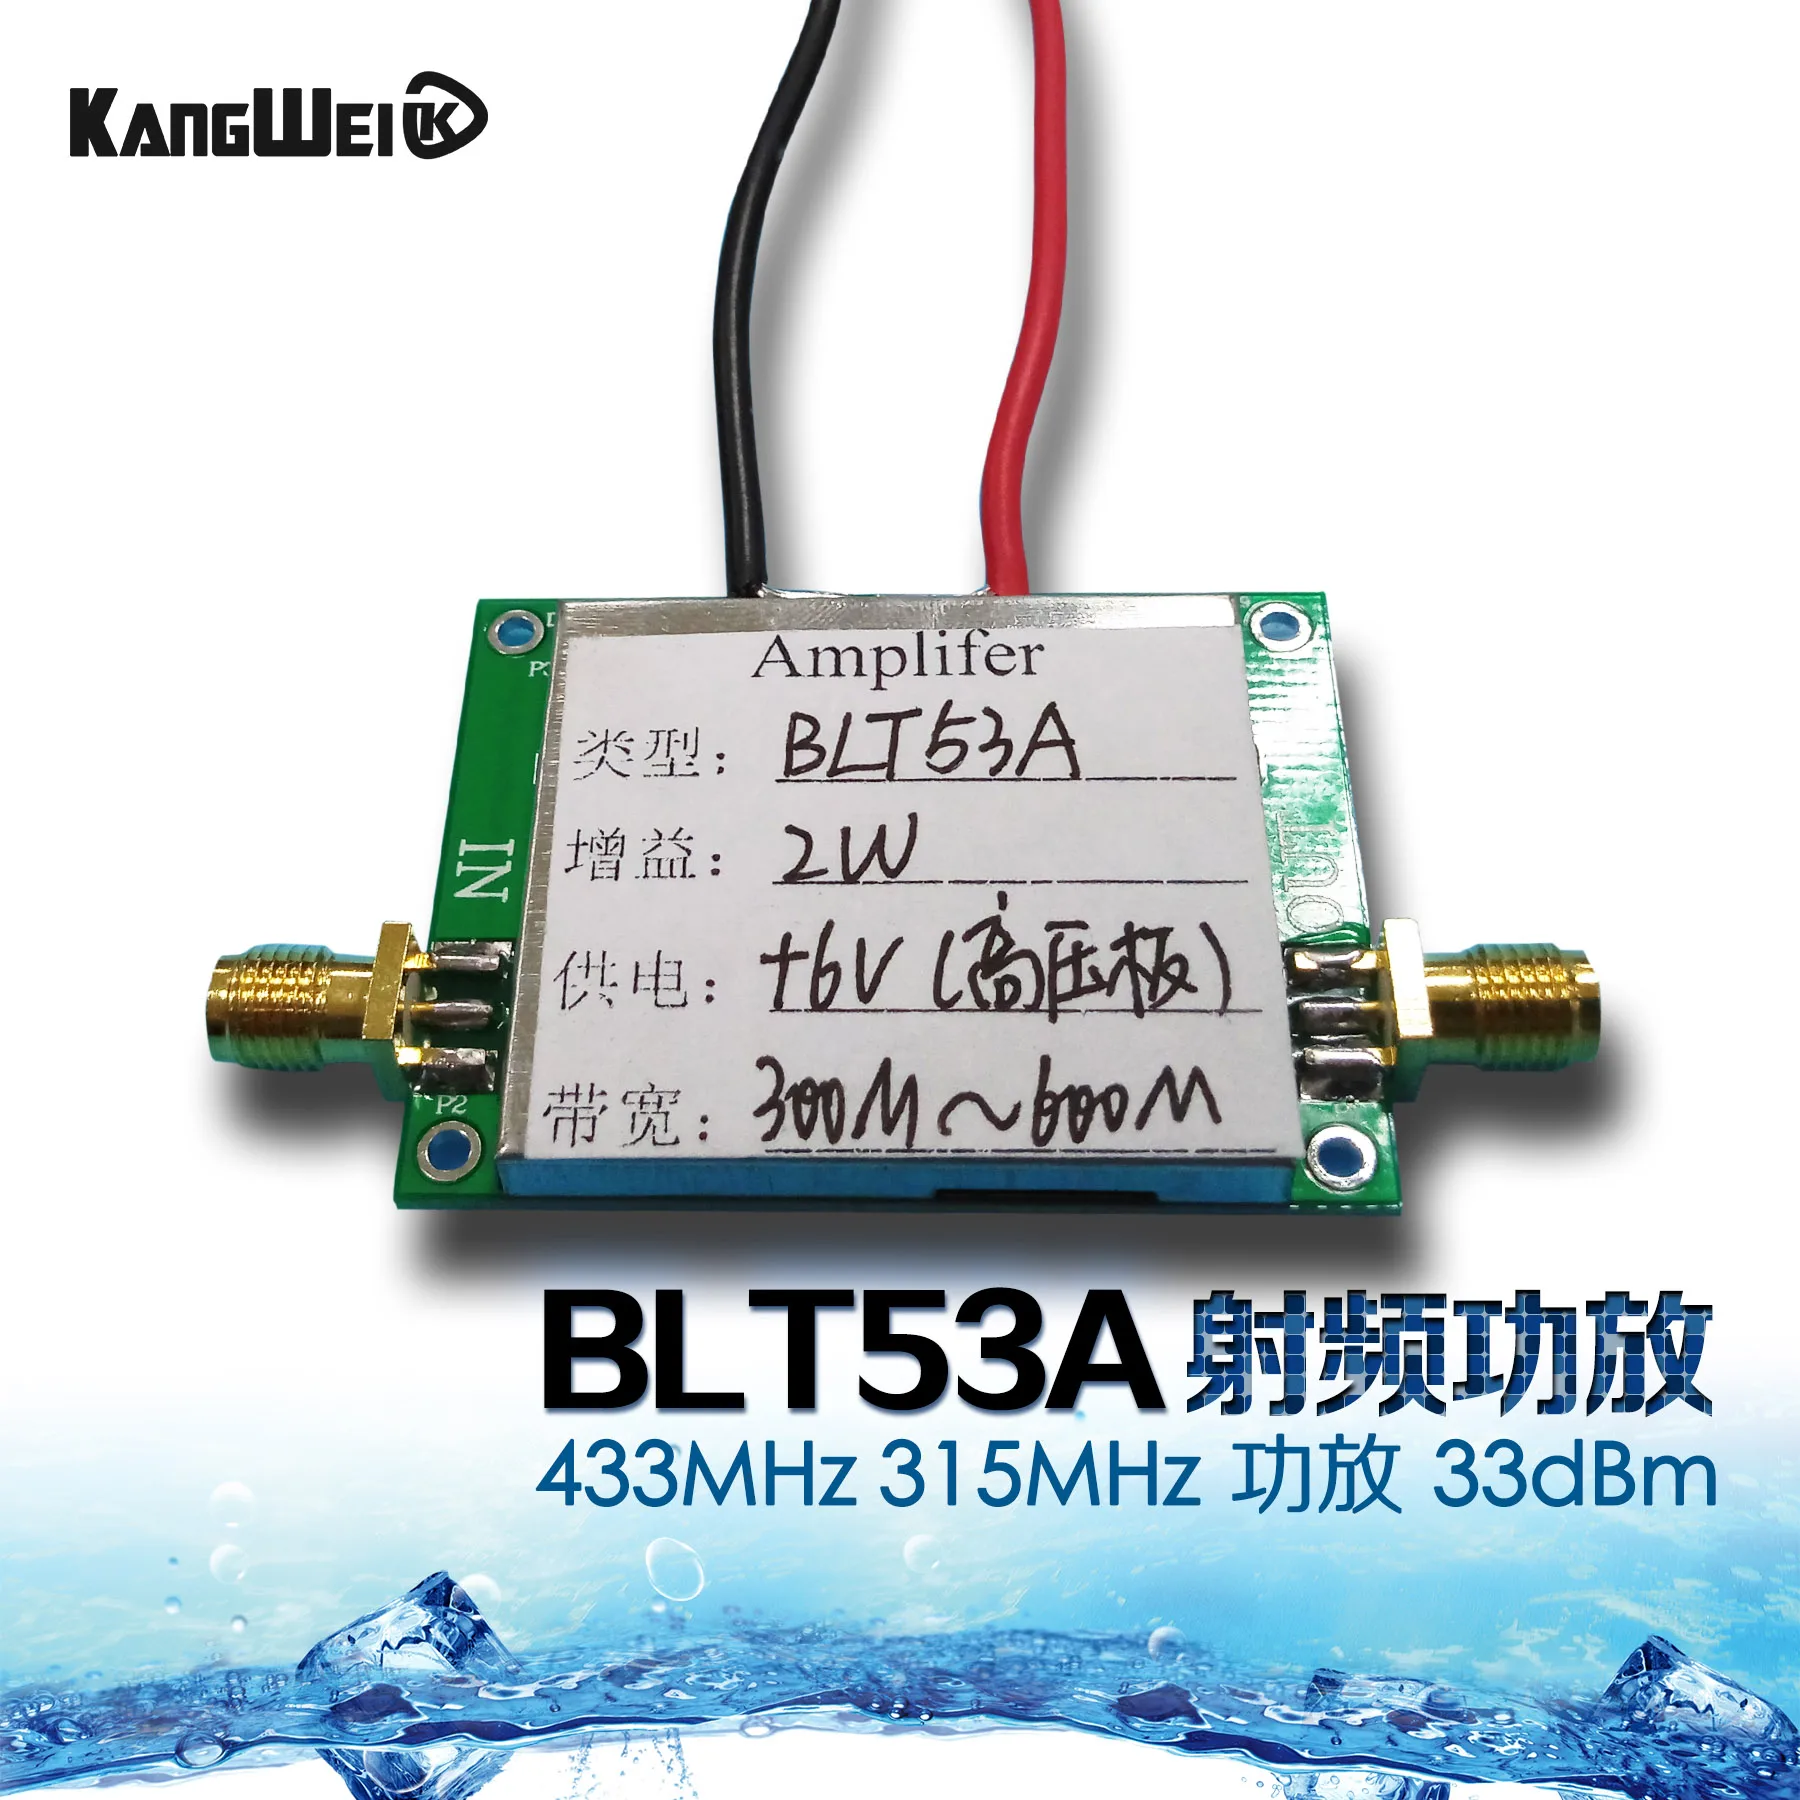 

BLT53A 433M RF Power Amplifier 2W High Power with Si4463, SI4432 Broadband High Gain